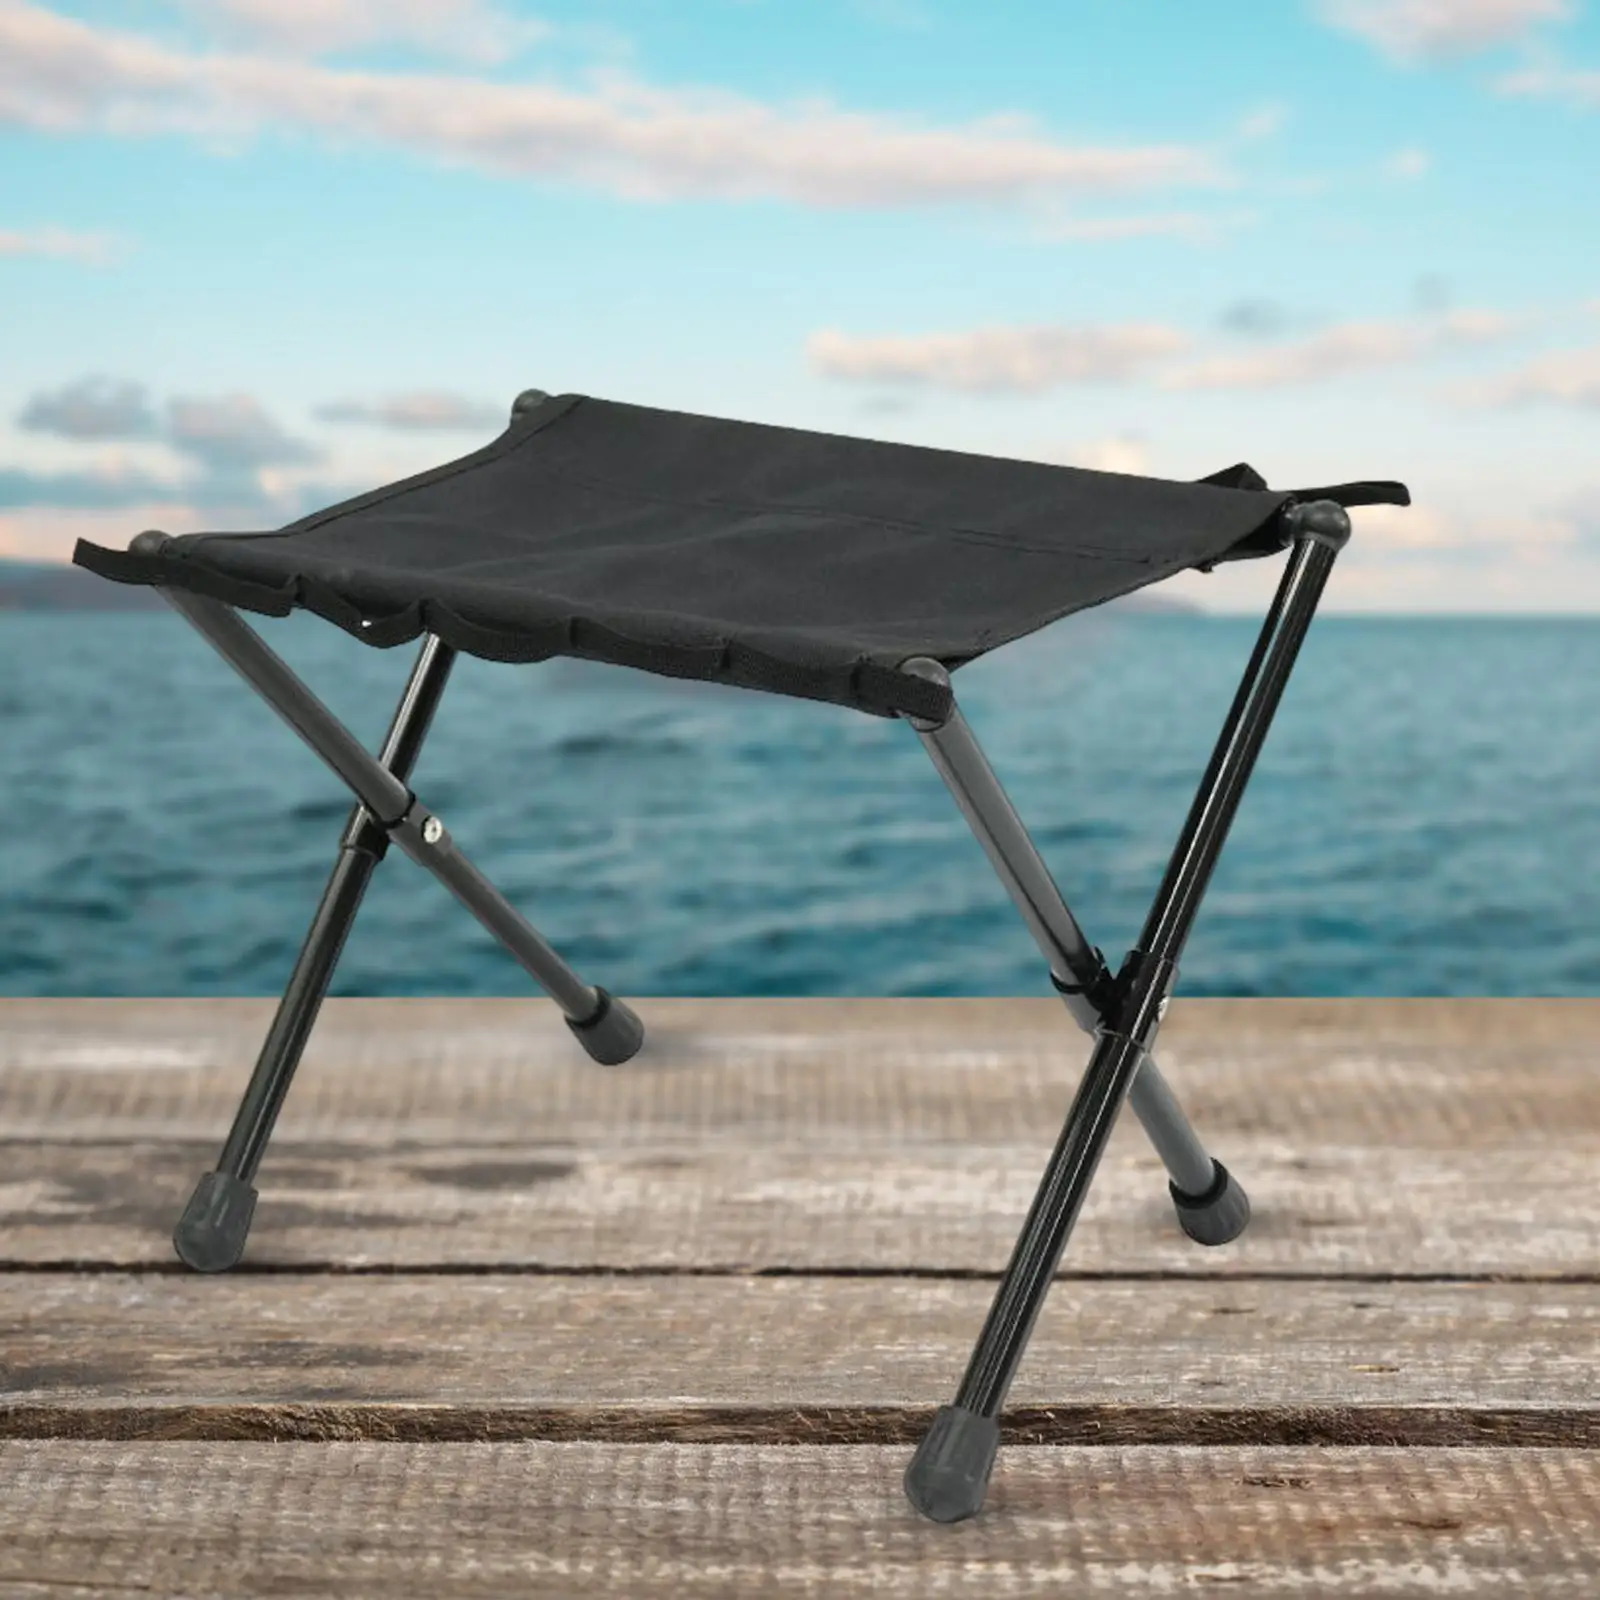 Portable Camping Chair Durable Reusable for Outdoor Activity